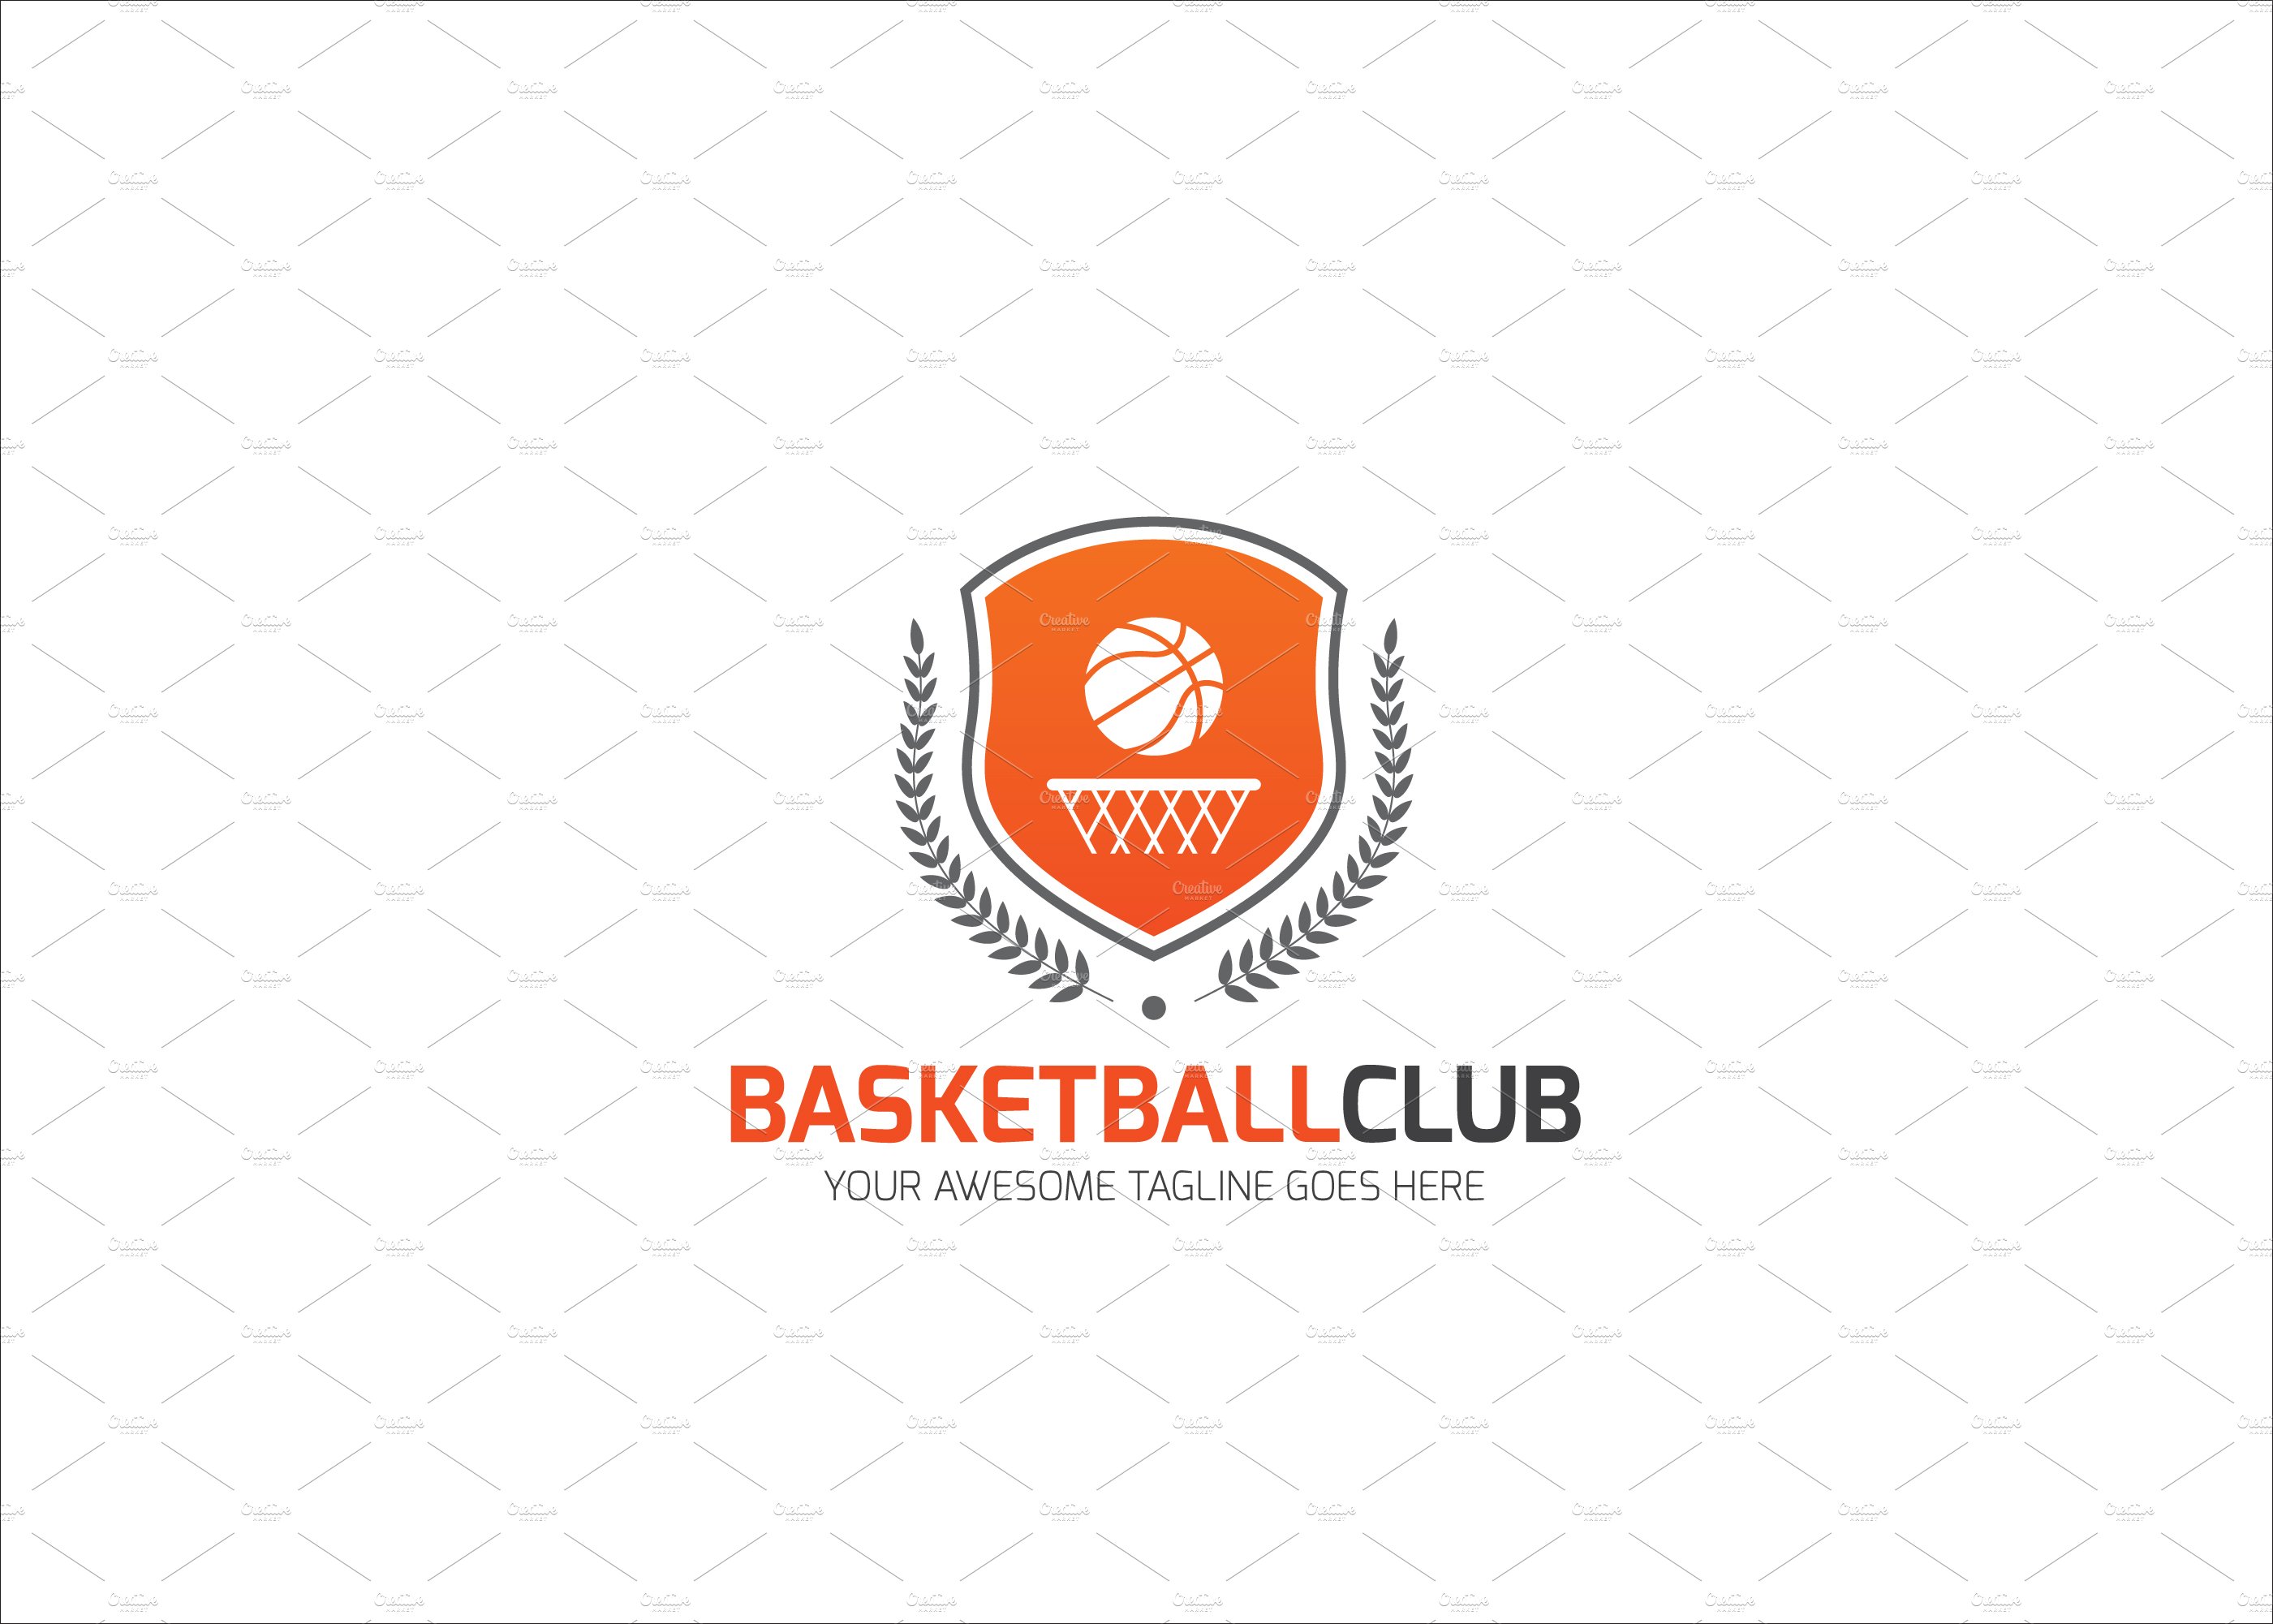 Cool basketball logo with an interesting geometric shape.